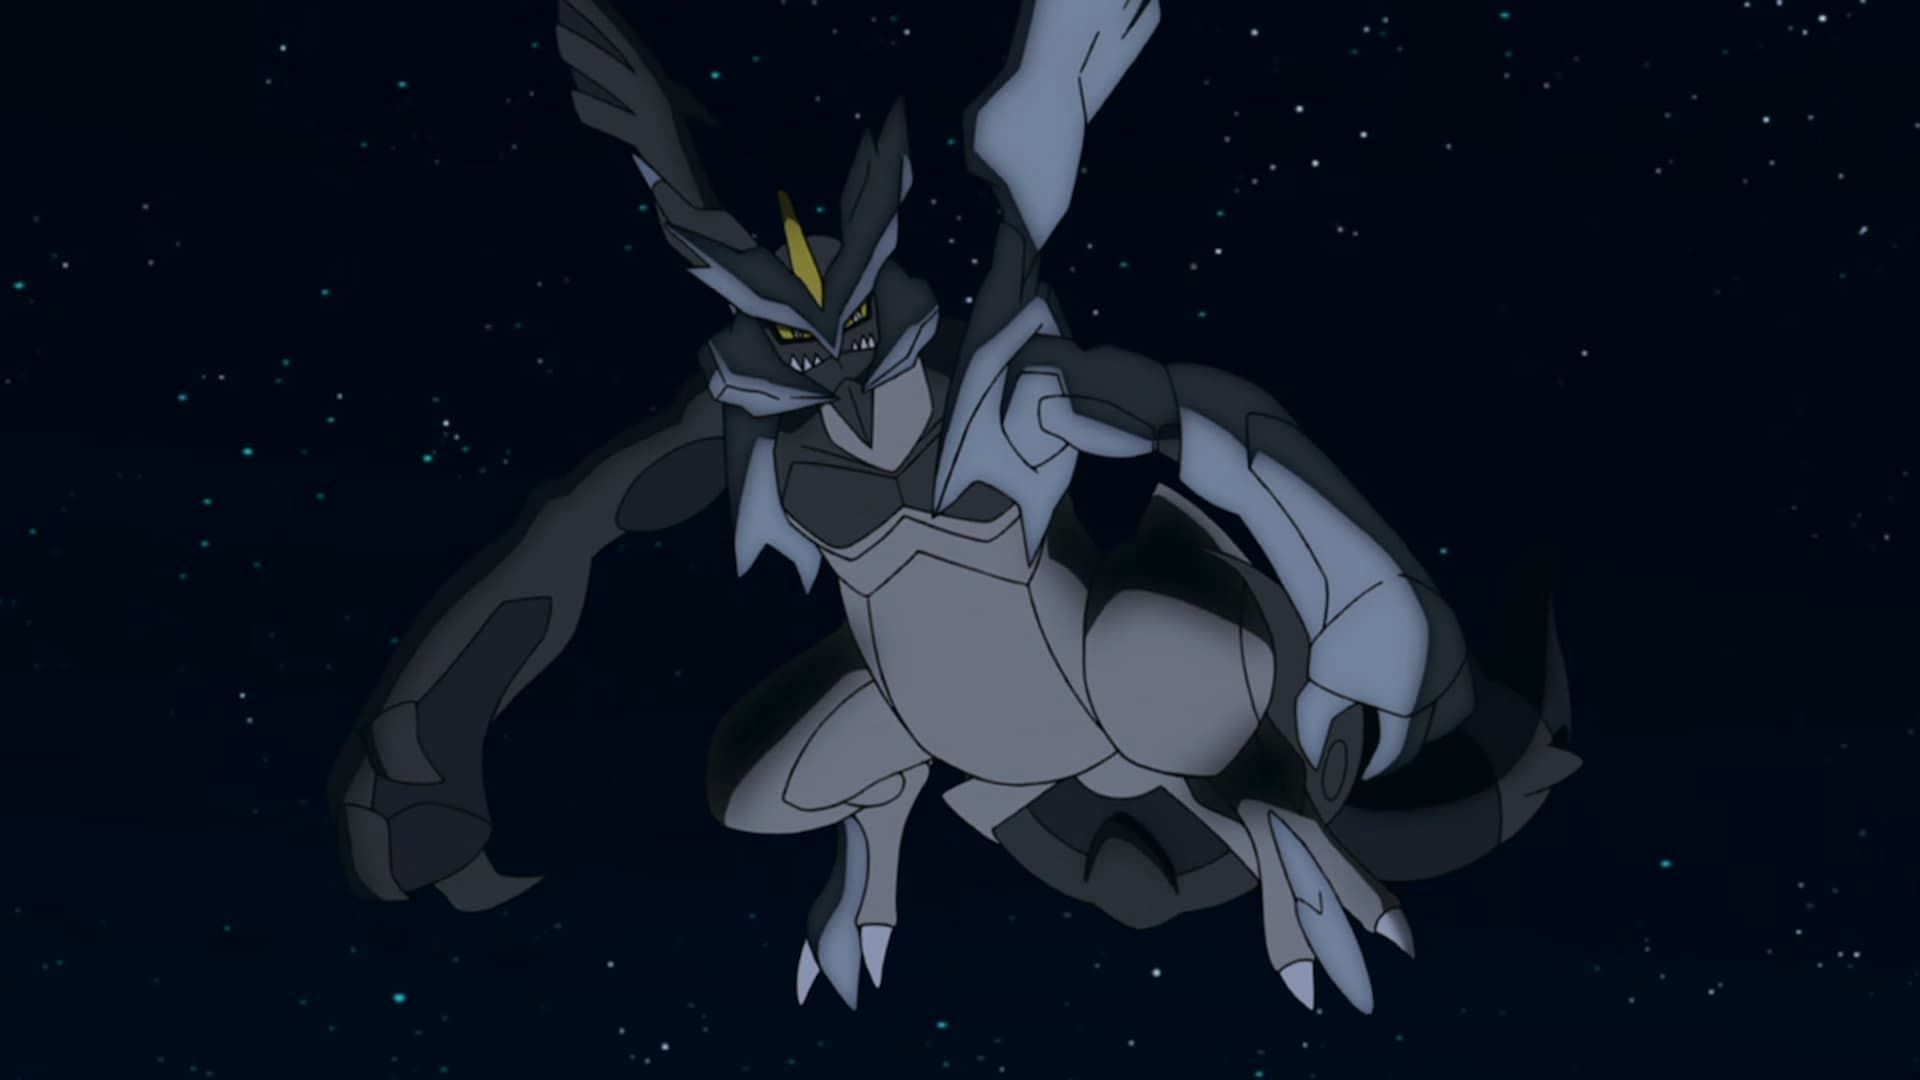 Kyurem Nero visto nell'anime (Immagine tramite The Pokemon Company)